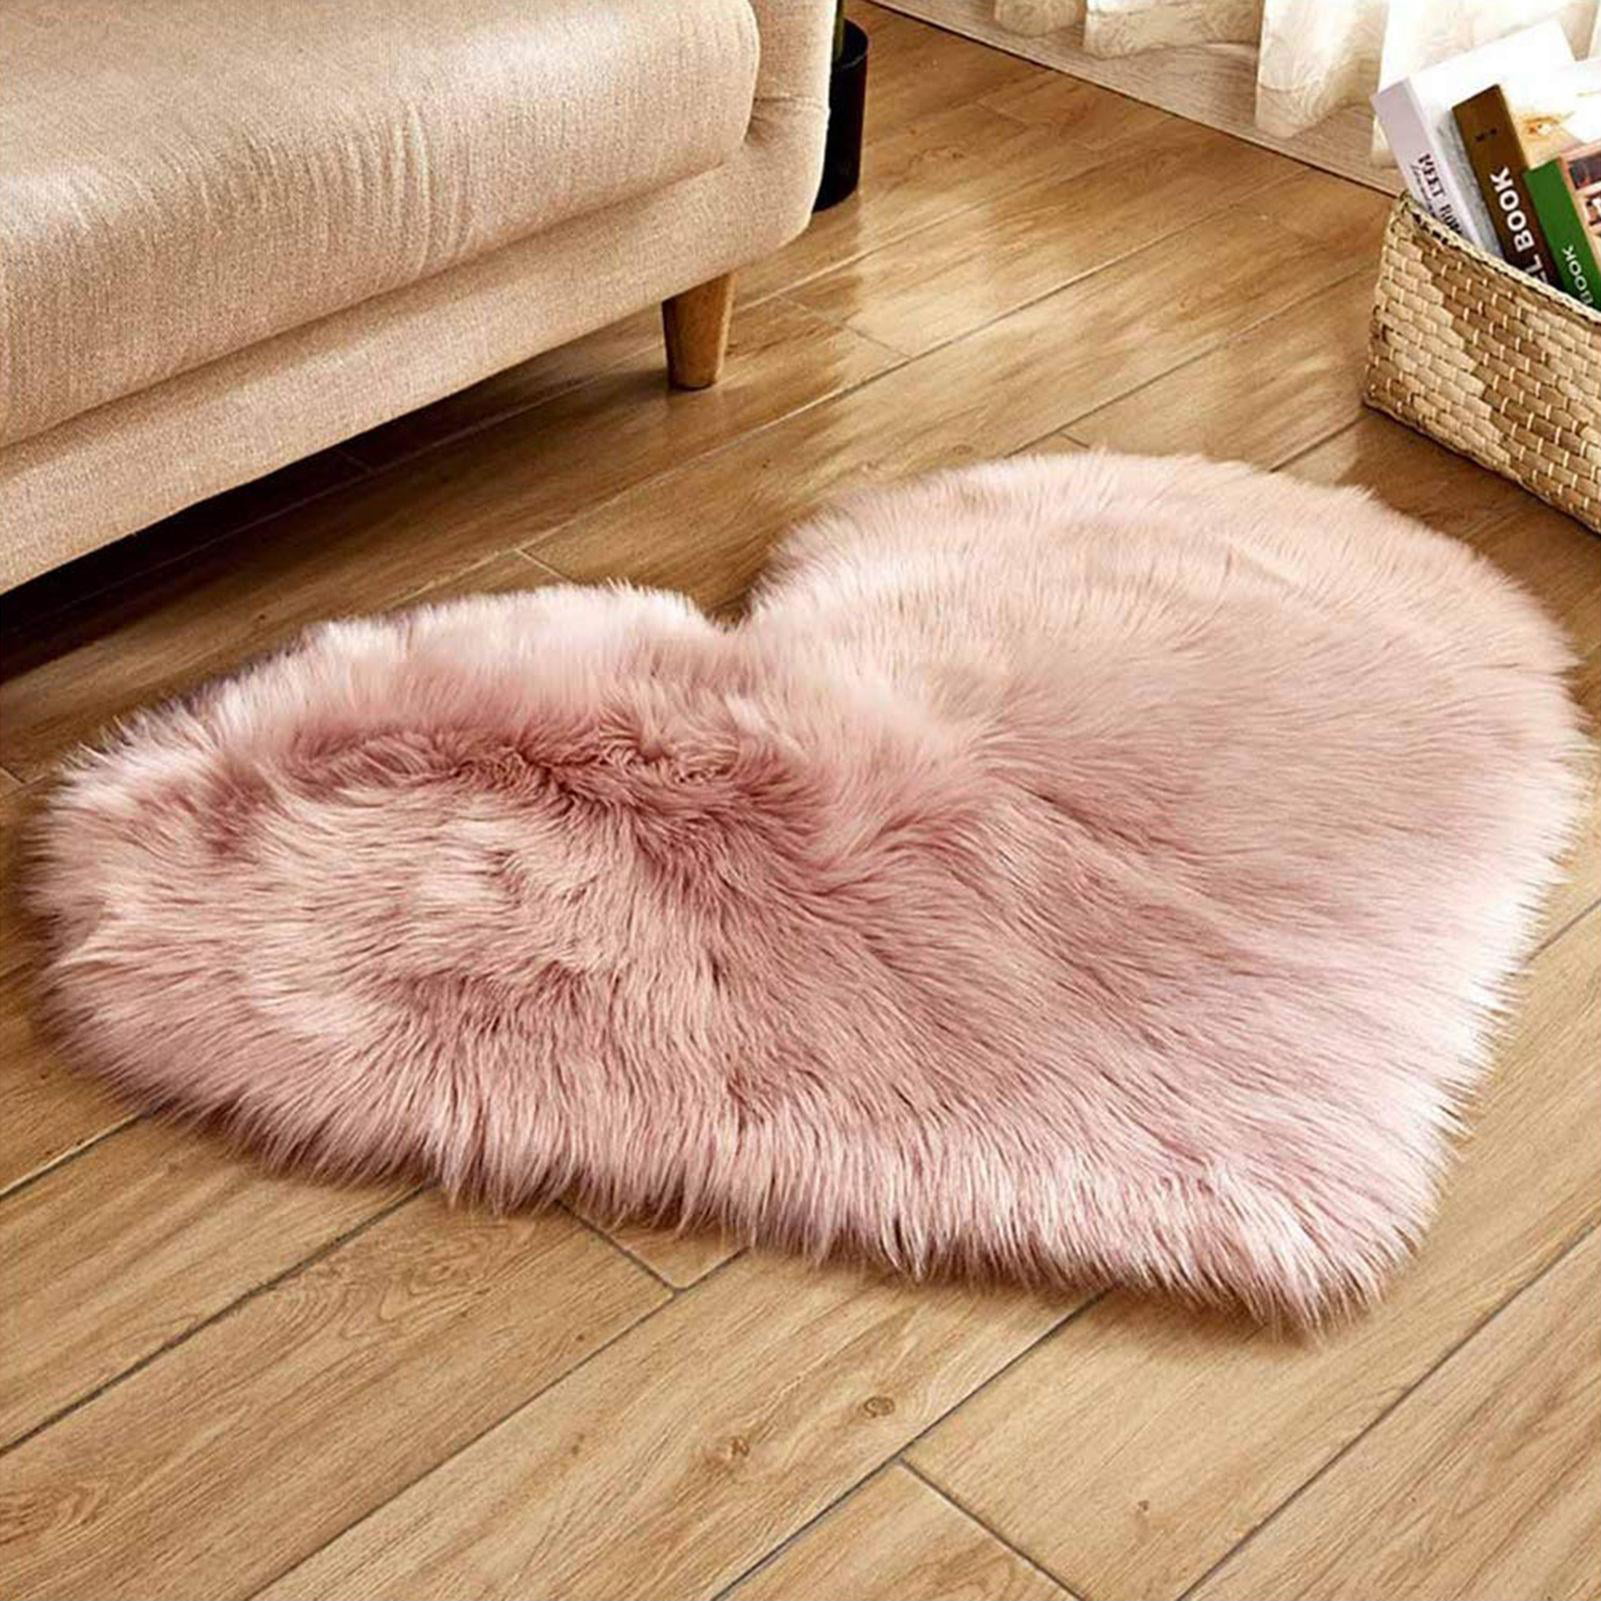 Details about   Super Soft Fluffy Faux Fur Sheepskin Rugs Non Slip Floor Carpet Rug Mats Plush 